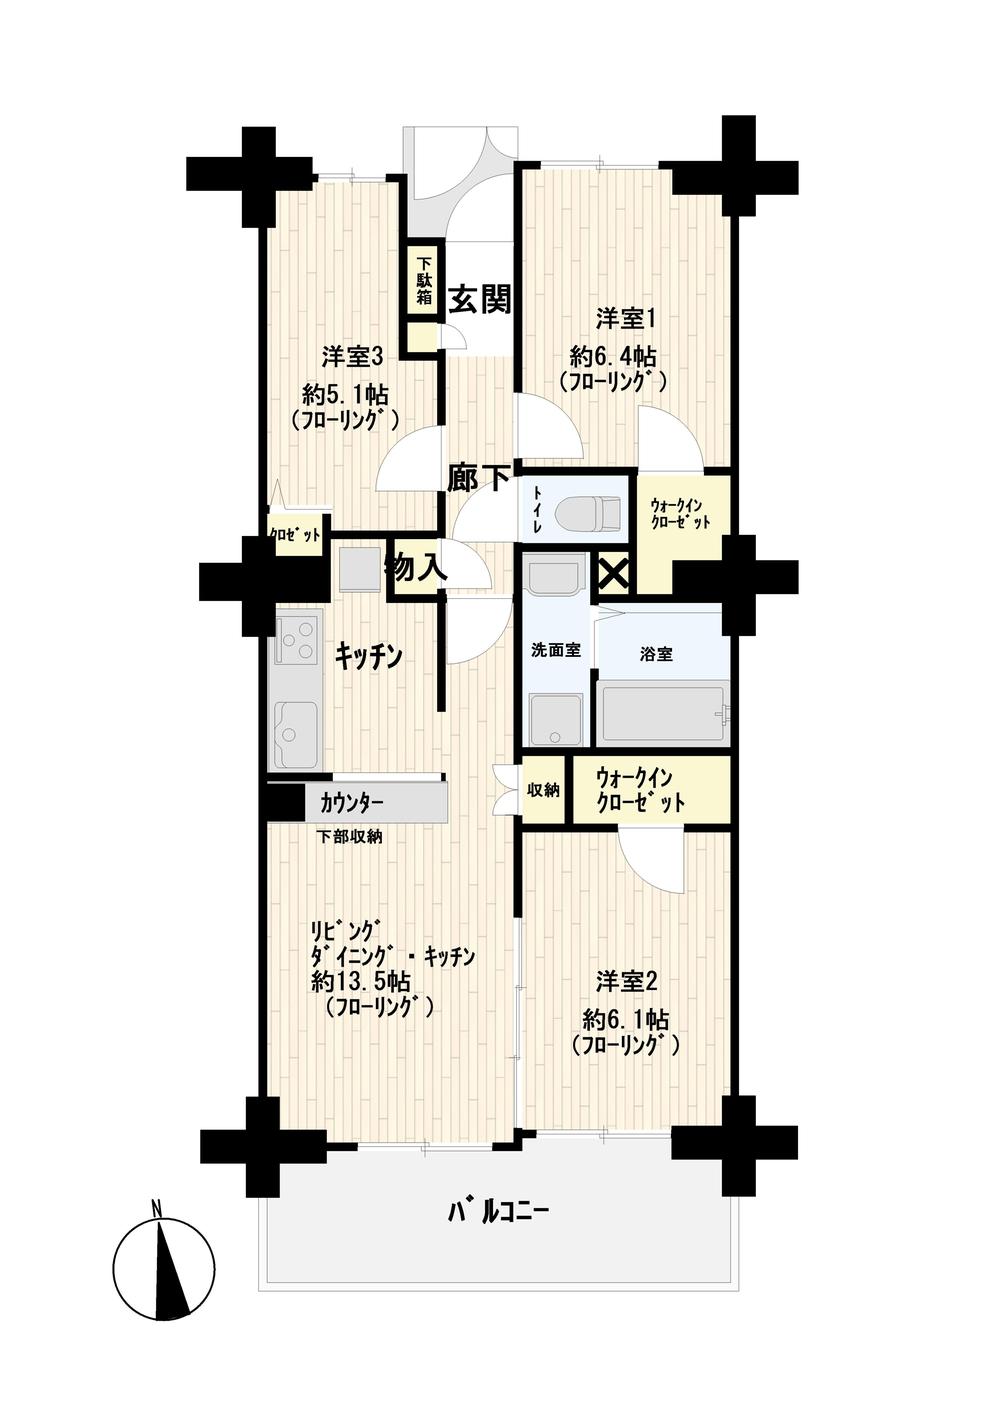 Floor plan. 3LDK + 2S (storeroom), Price 23,990,000 yen, Occupied area 68.39 sq m , Is a good floor plan of the balcony area 10.68 sq m usability